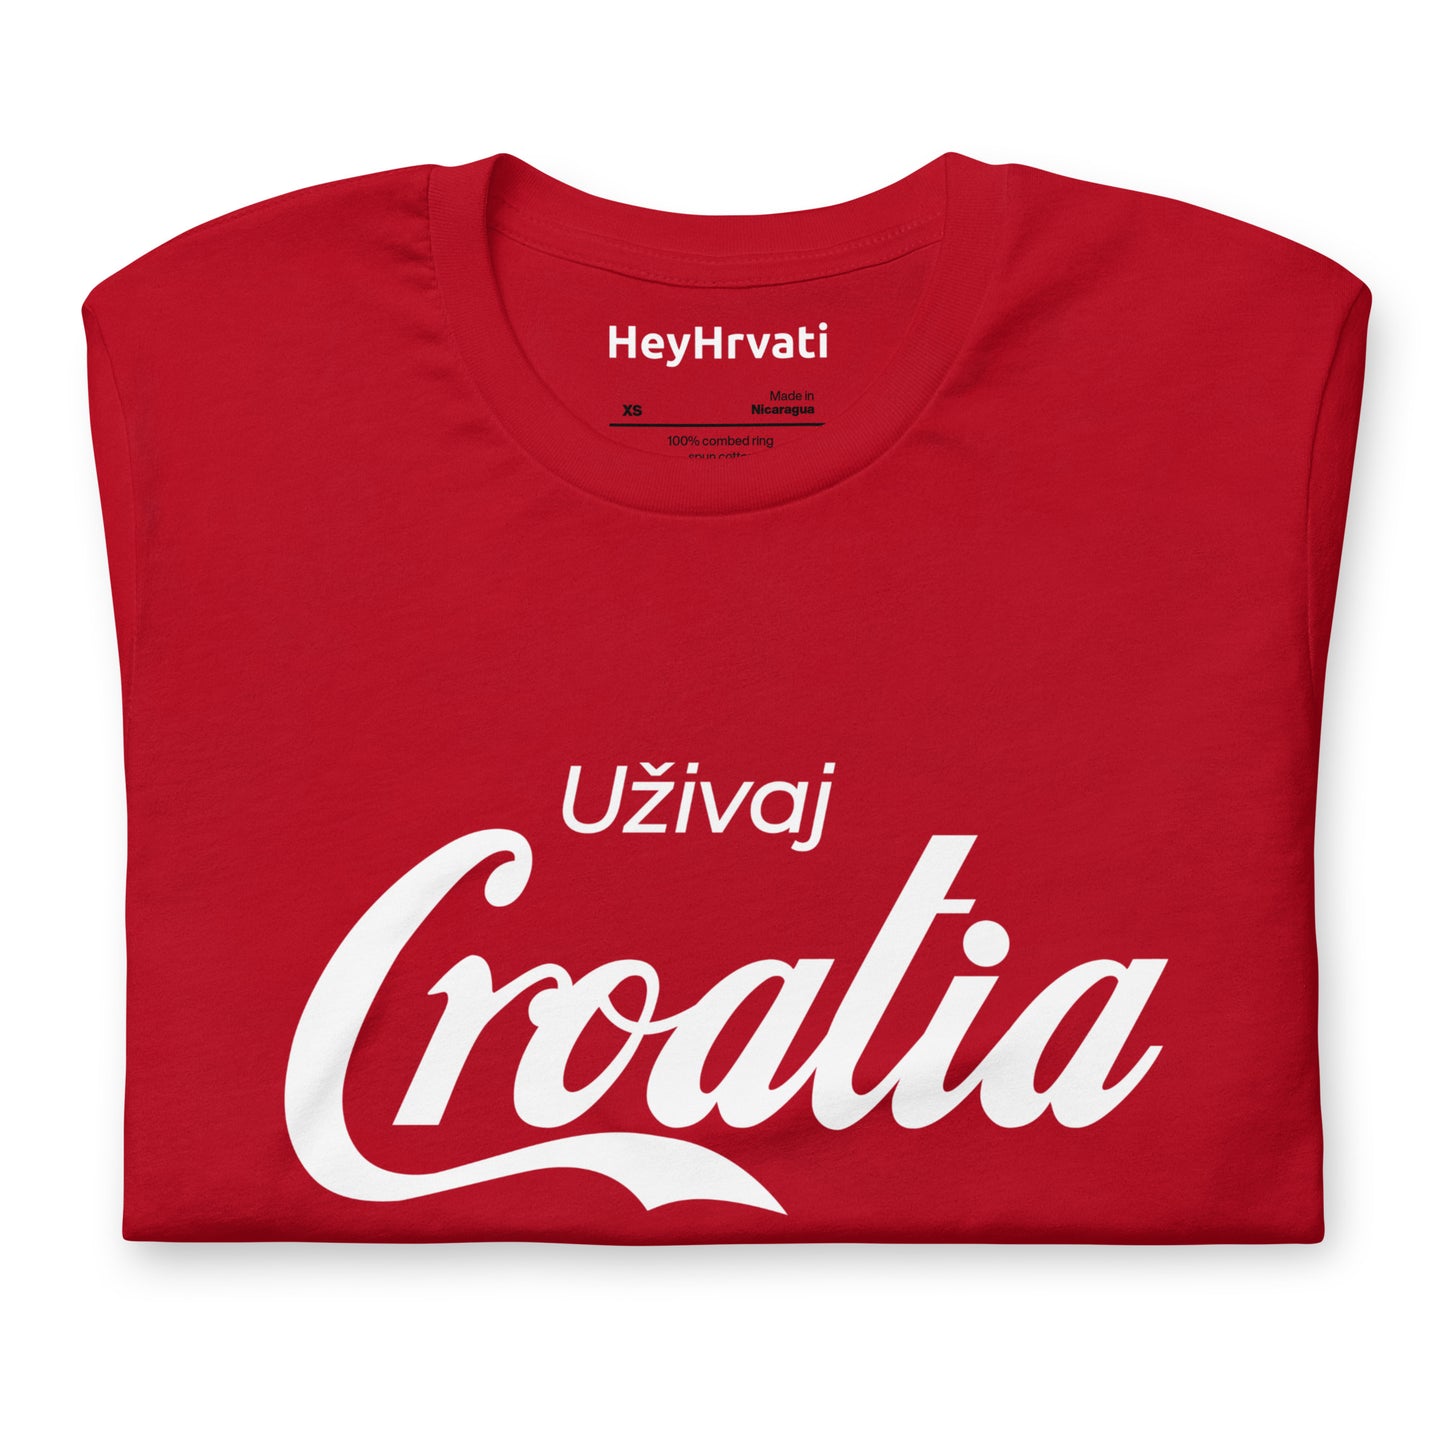 Uživaj Croatia (Enjoy Croatia) Unisex t-shirt